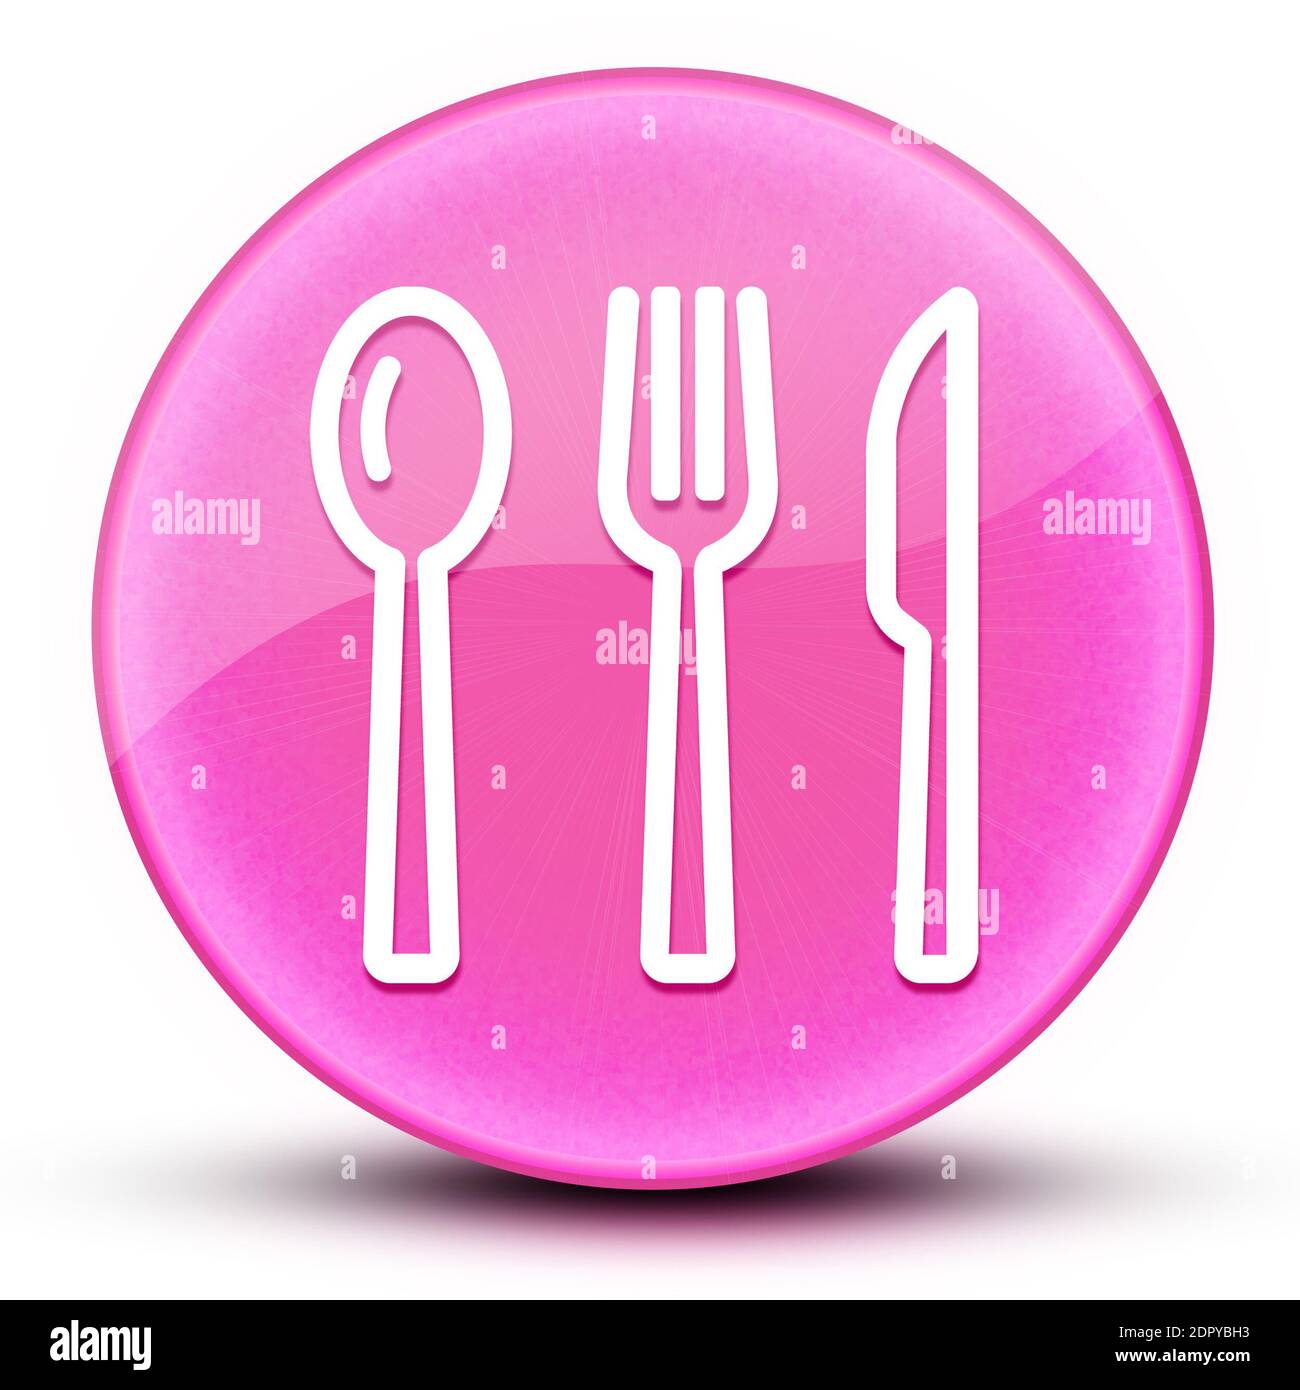 Cutlery eyeball glossy elegant pink round button abstract illustration Stock Photo